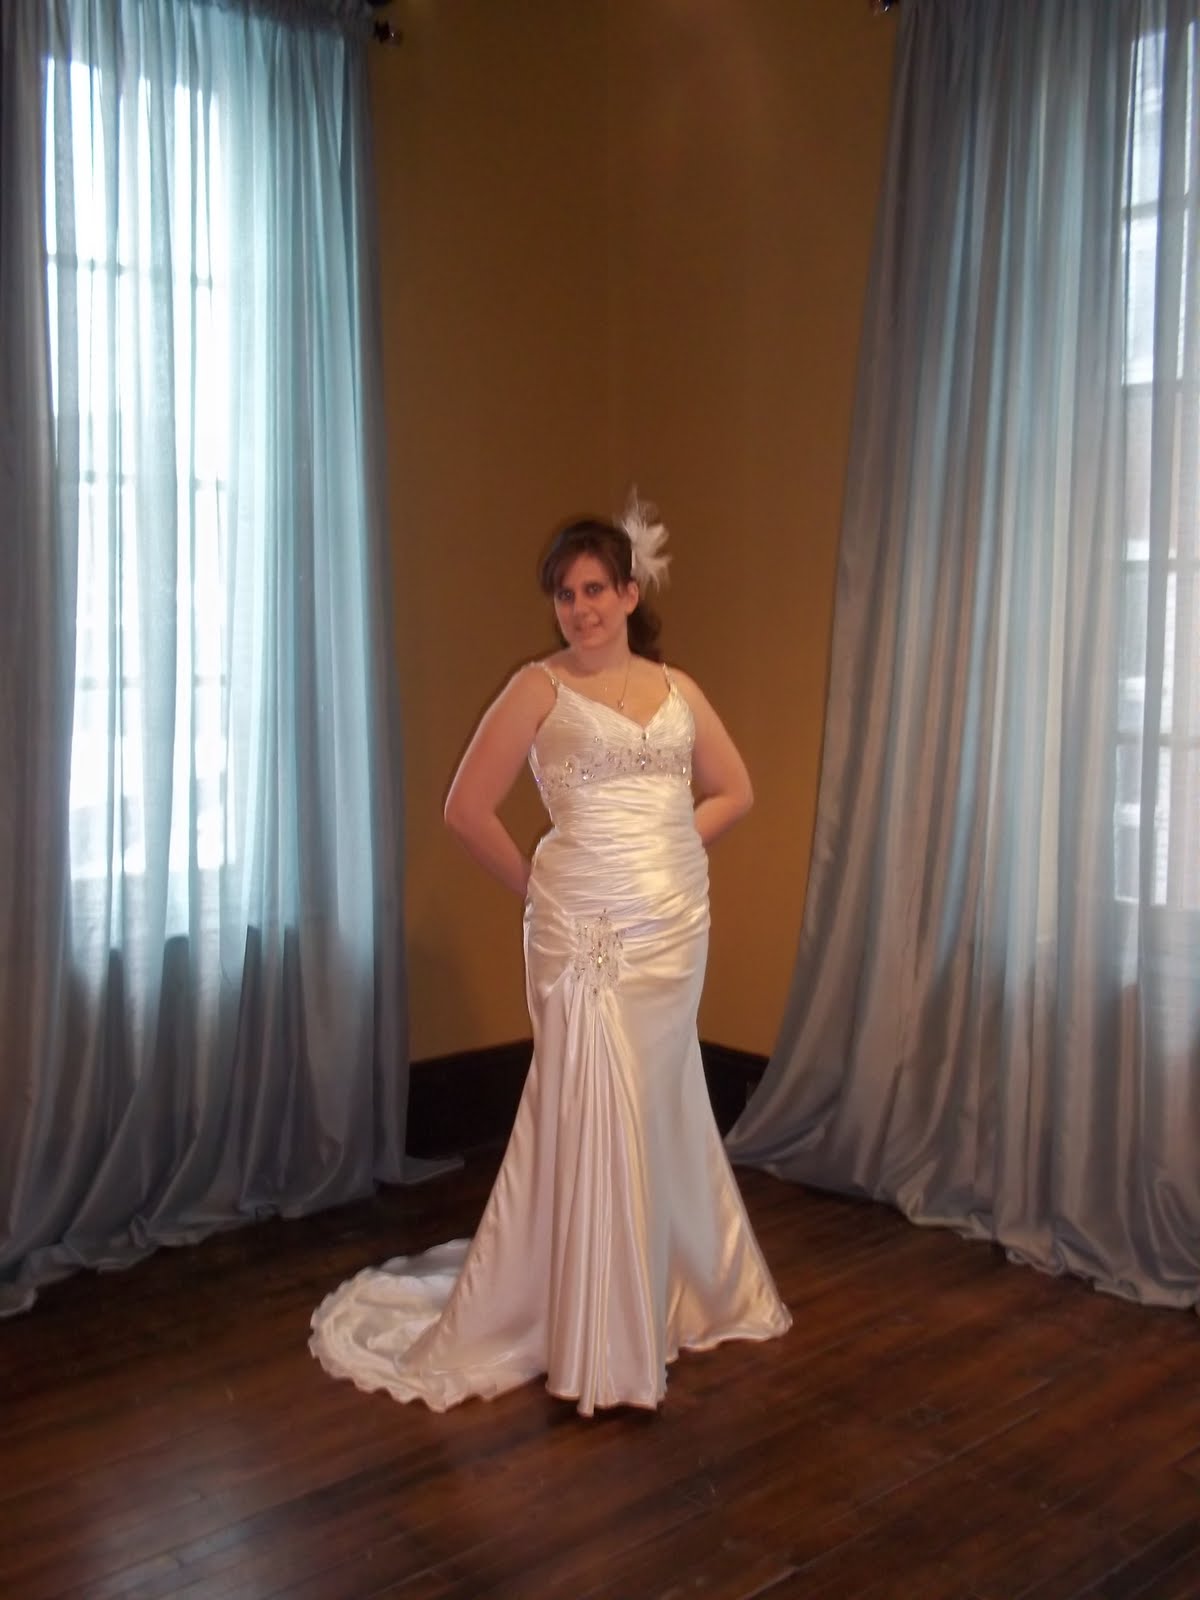 The Wedding Tree: Bridal Body Shapes: What Dress Should I Wear?